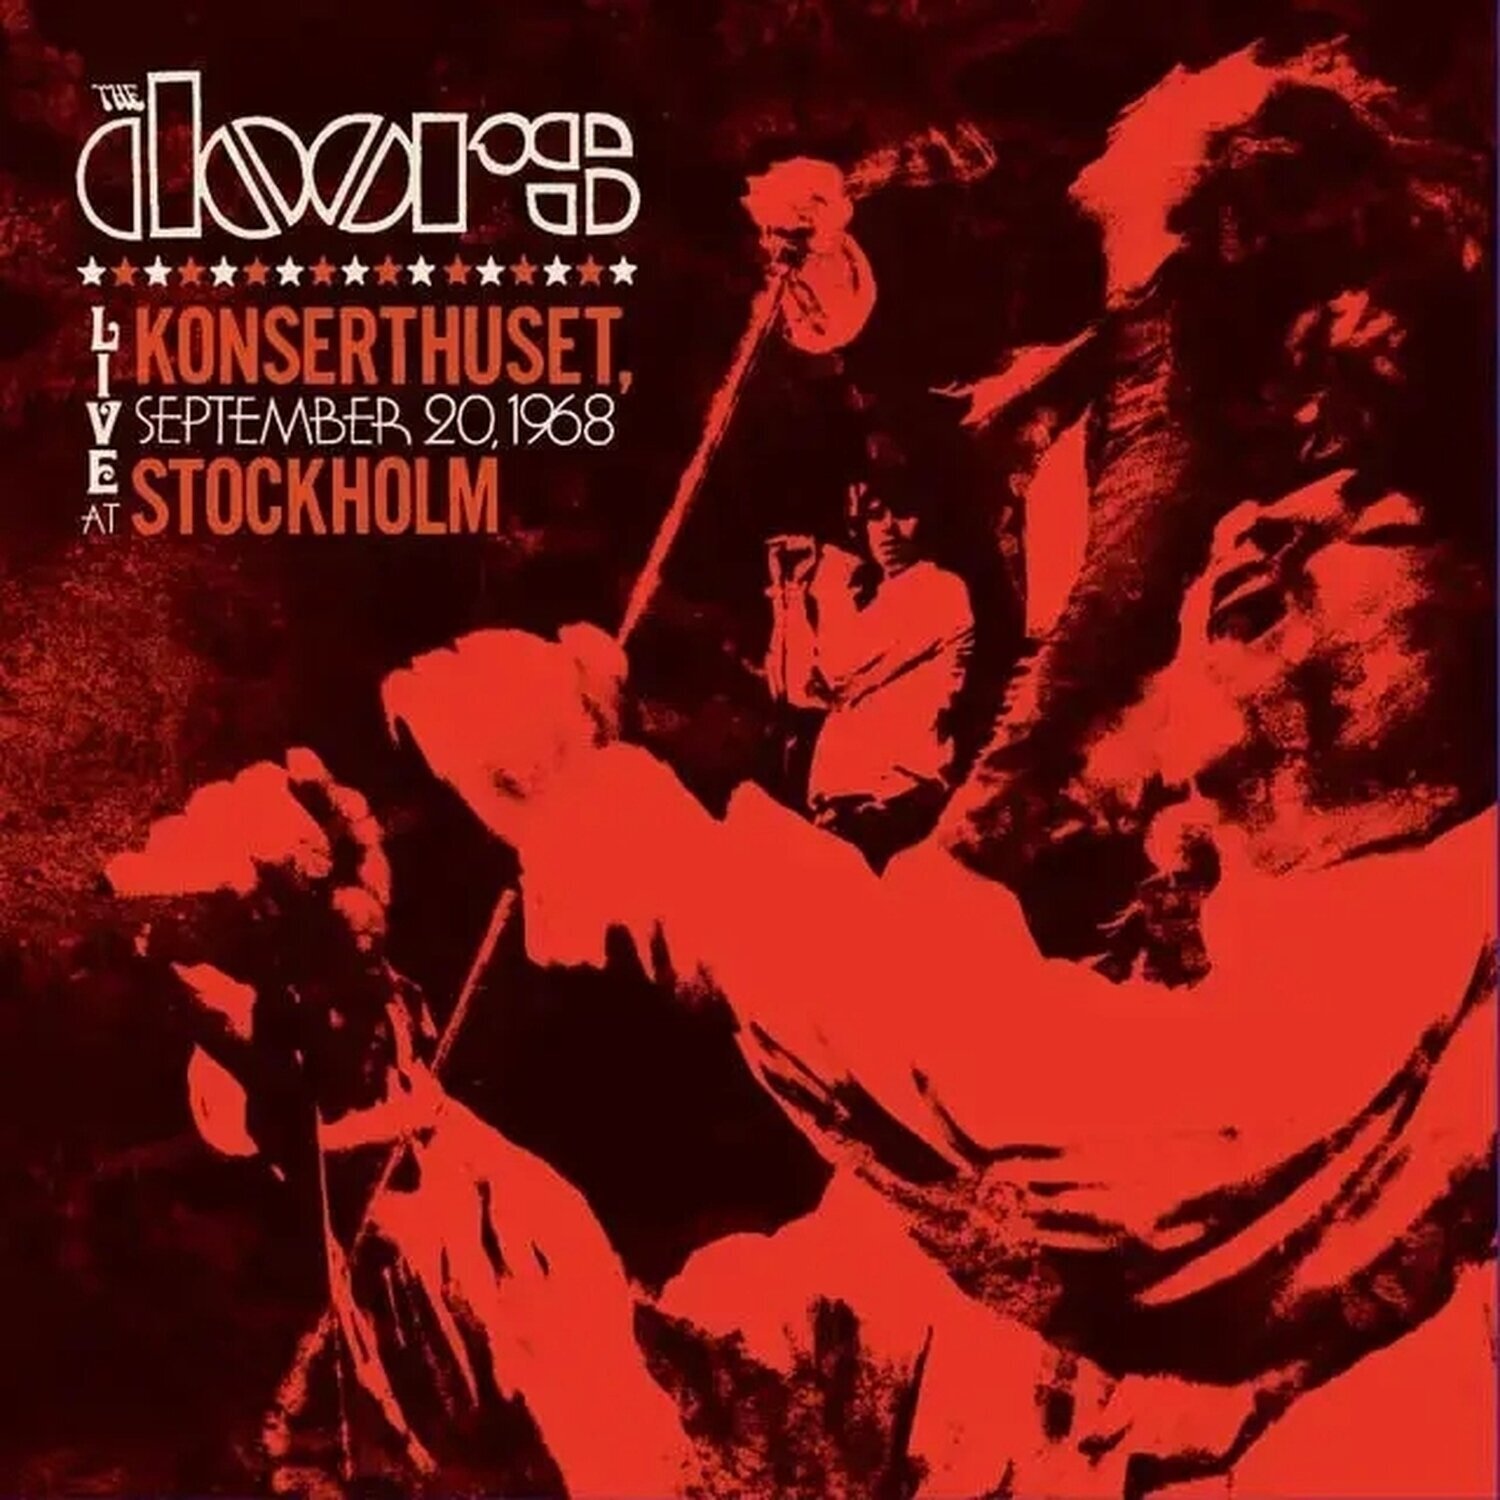 Vinyl Record The Doors - Live At Konserthuset, Stockholm, 1968 (Rsd 2024) (Blue Coloured) (3 LP)